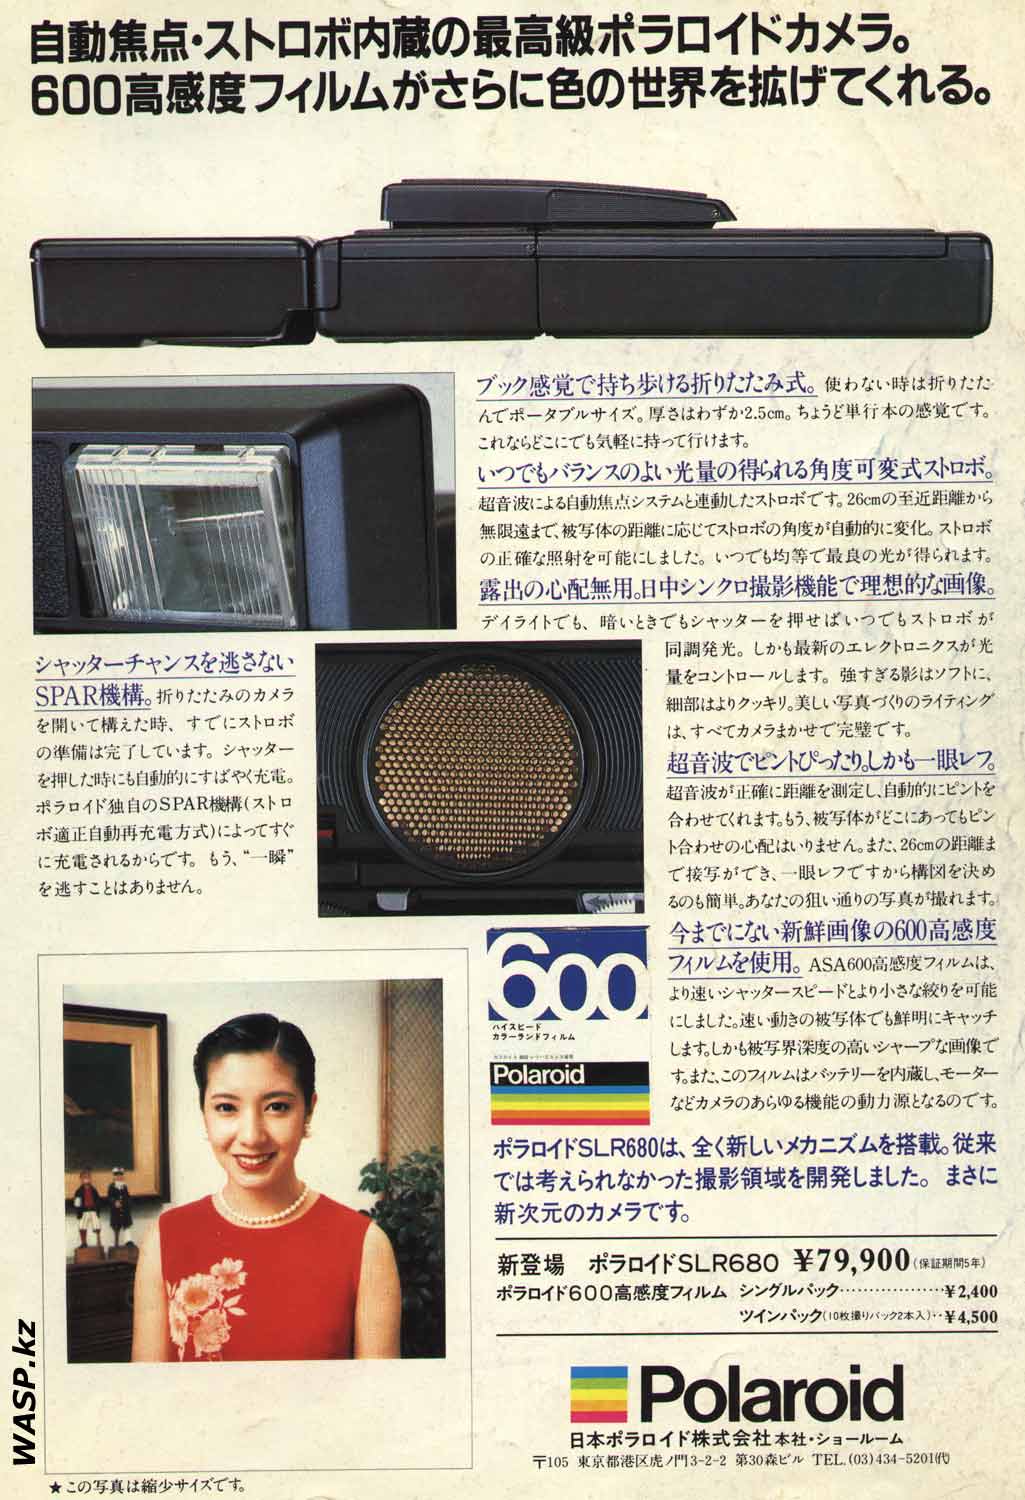 Polaroid SLR680 рекламная страница, Япония